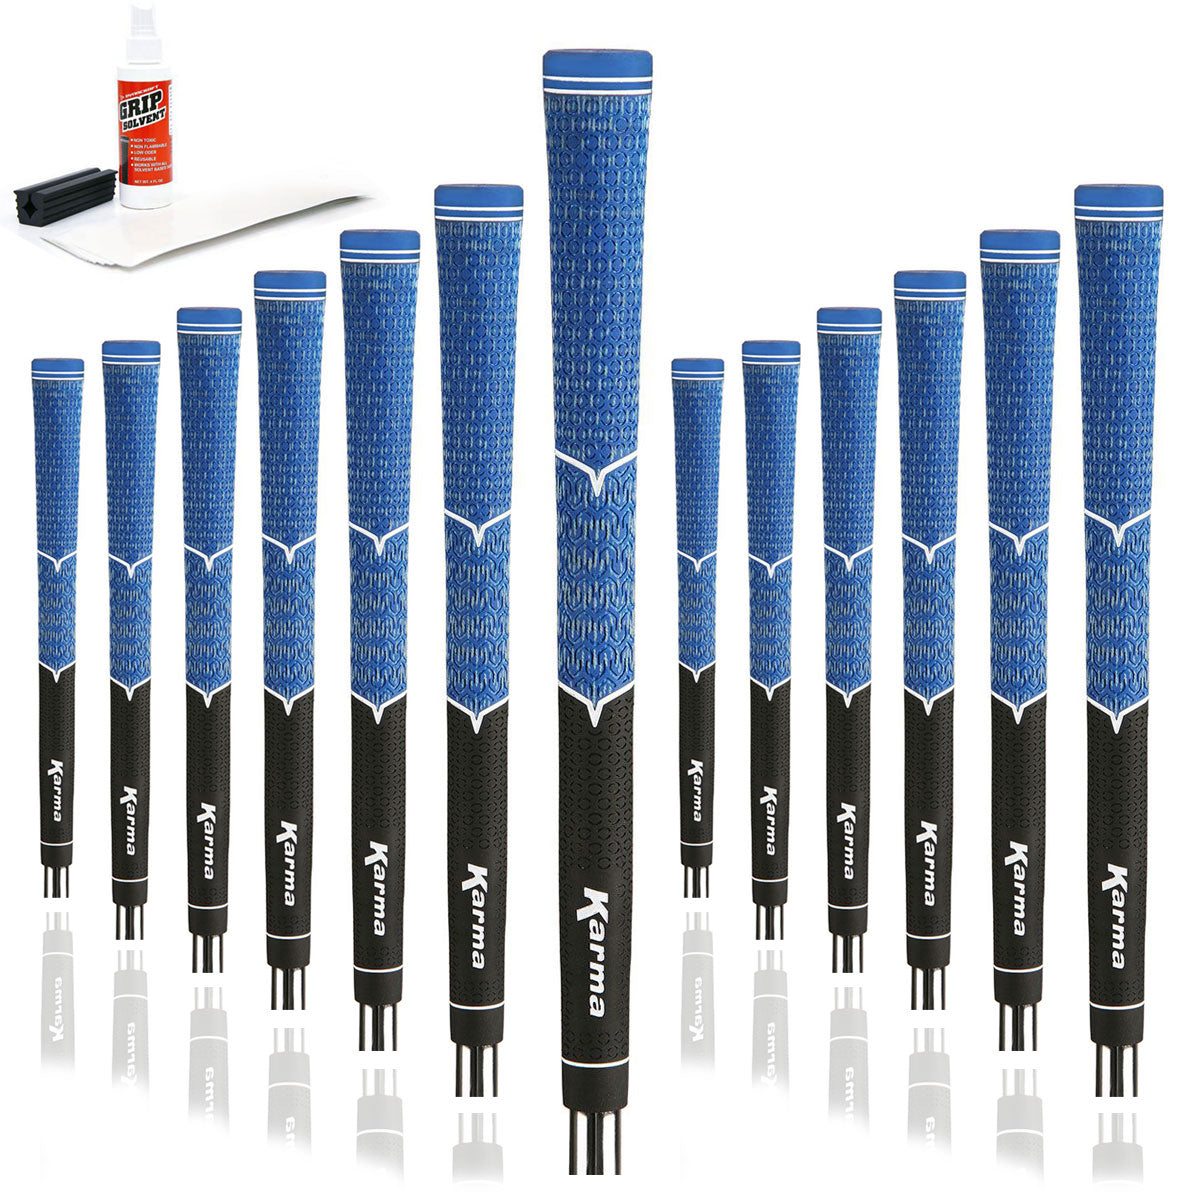 13 Karma V-Cord Black/Blue golf grips, golf grip tape strips, bottle of grip solvent and rubber shaft clamp